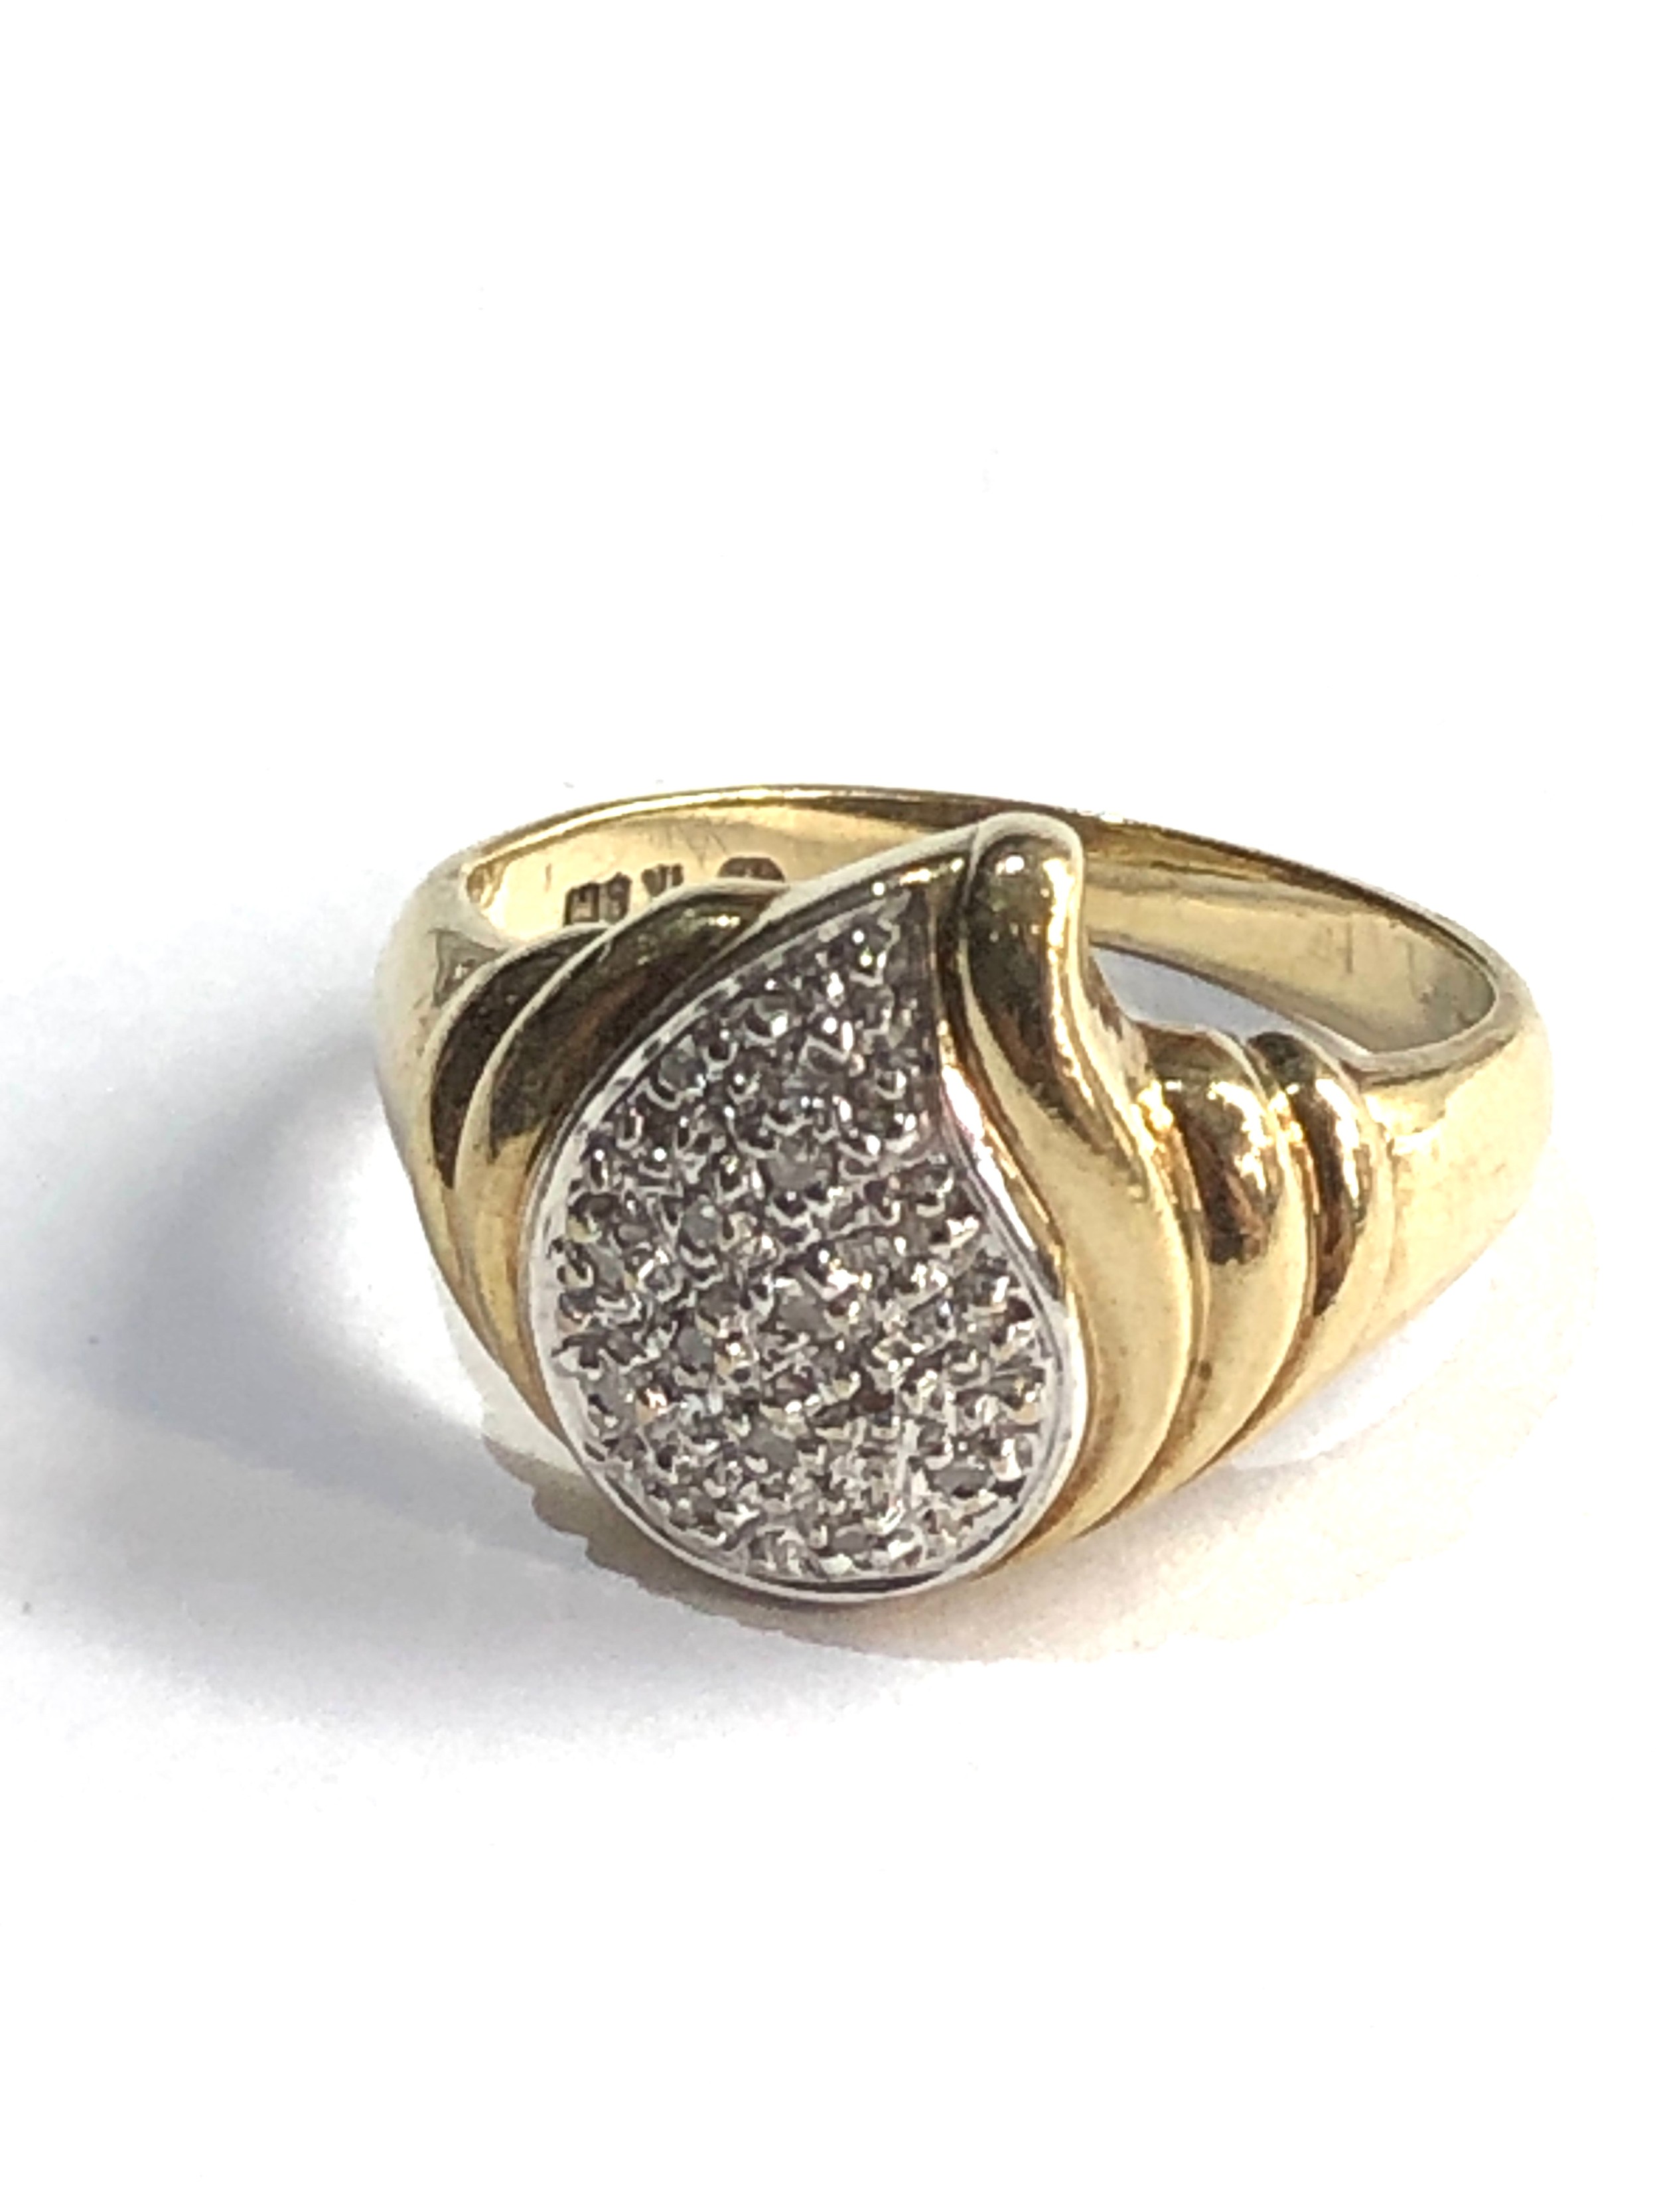 9ct gold diamond ring 4.5g - Image 2 of 3